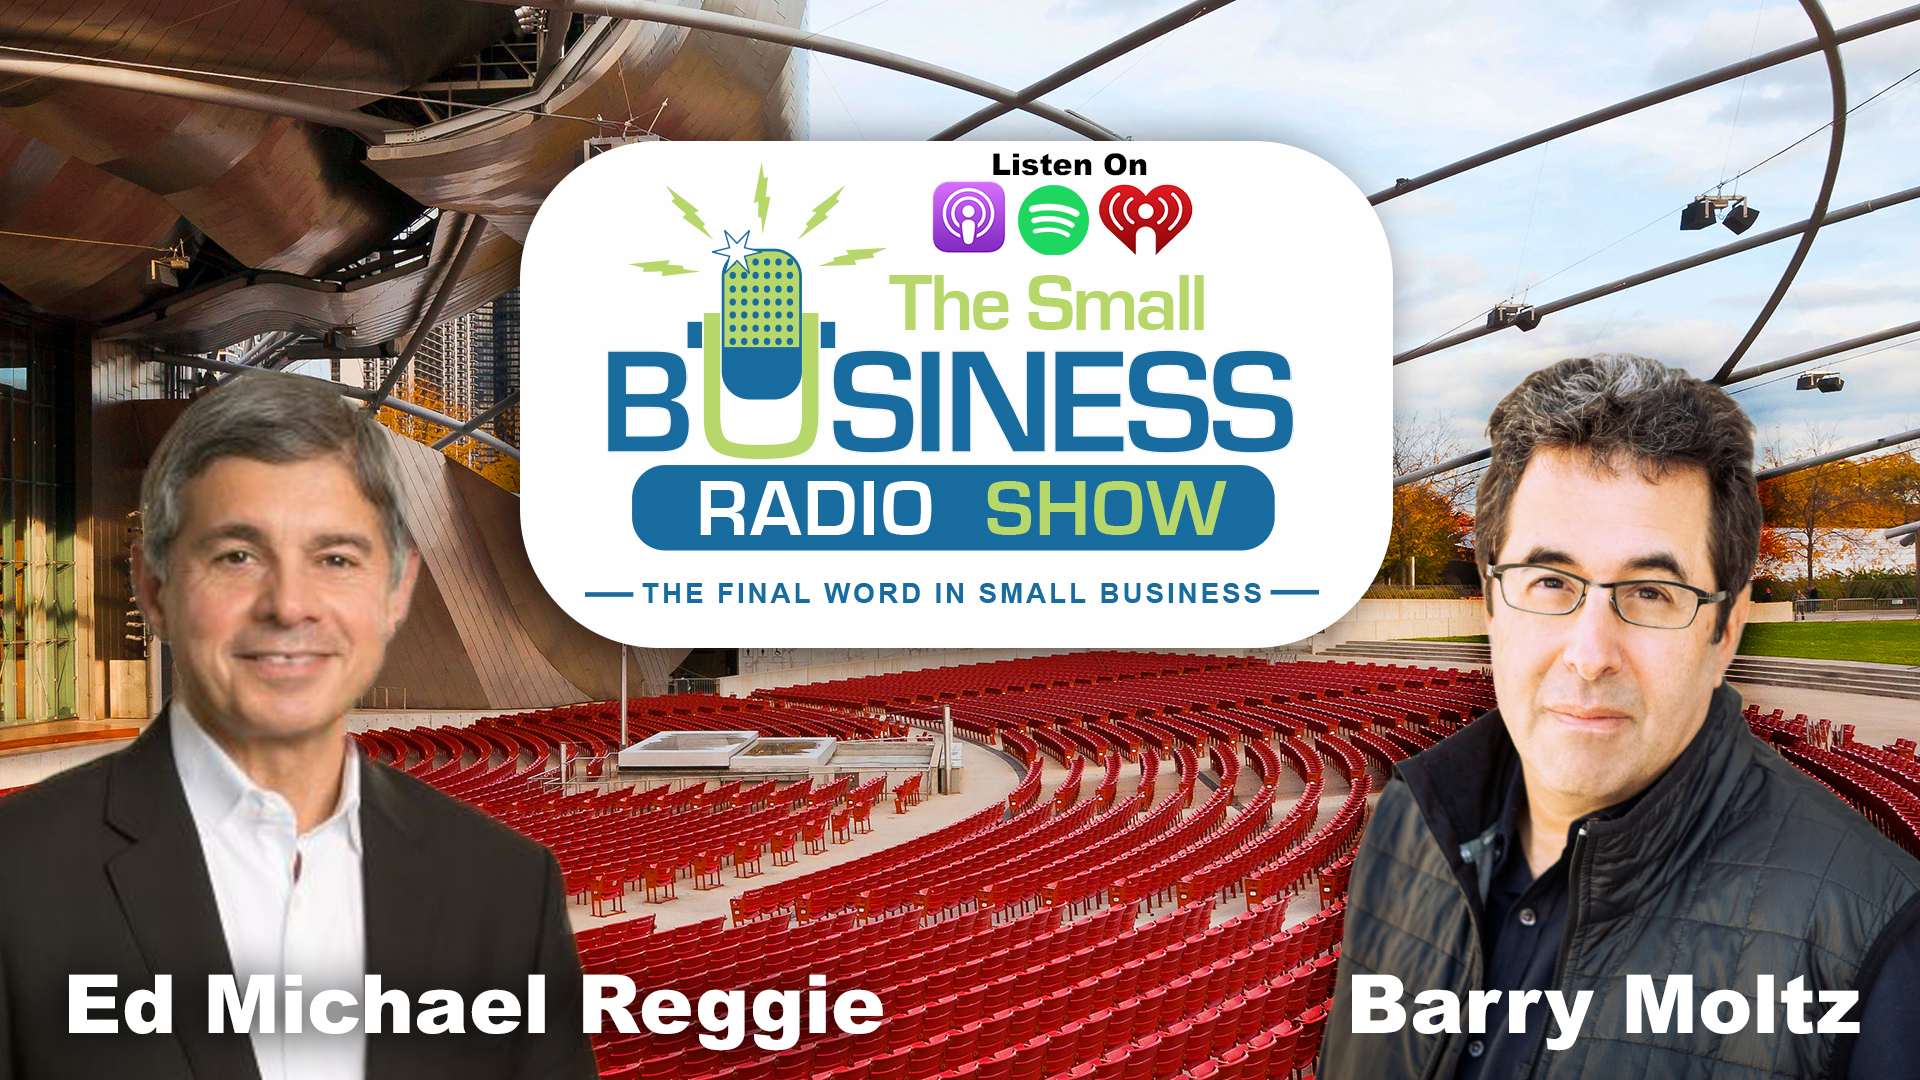 Ed Michael Reggie on The Small Business Radio Show